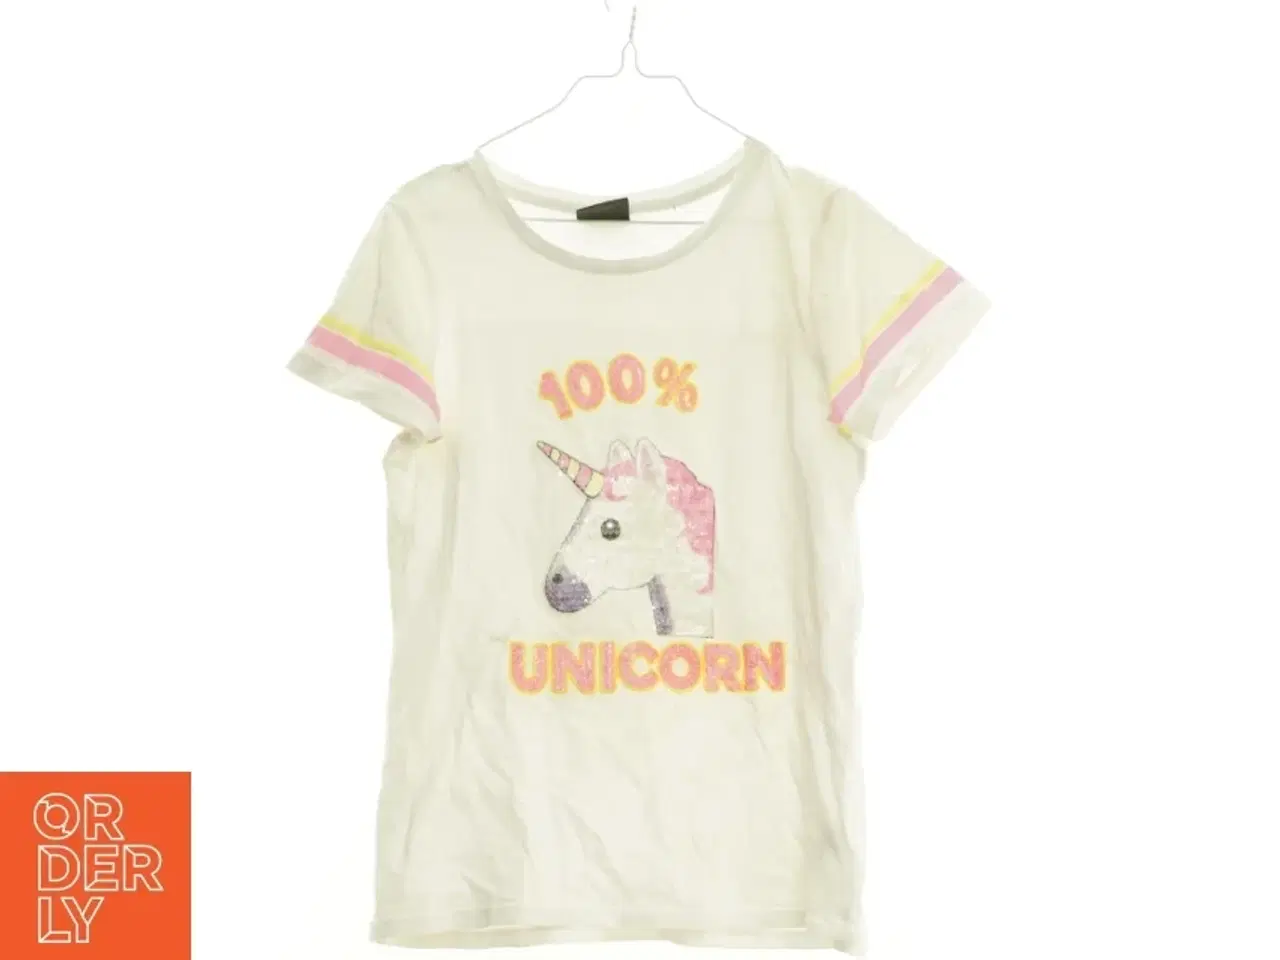 Billede 1 - T-Shirt, 100% unicorn (str. 140 cm)